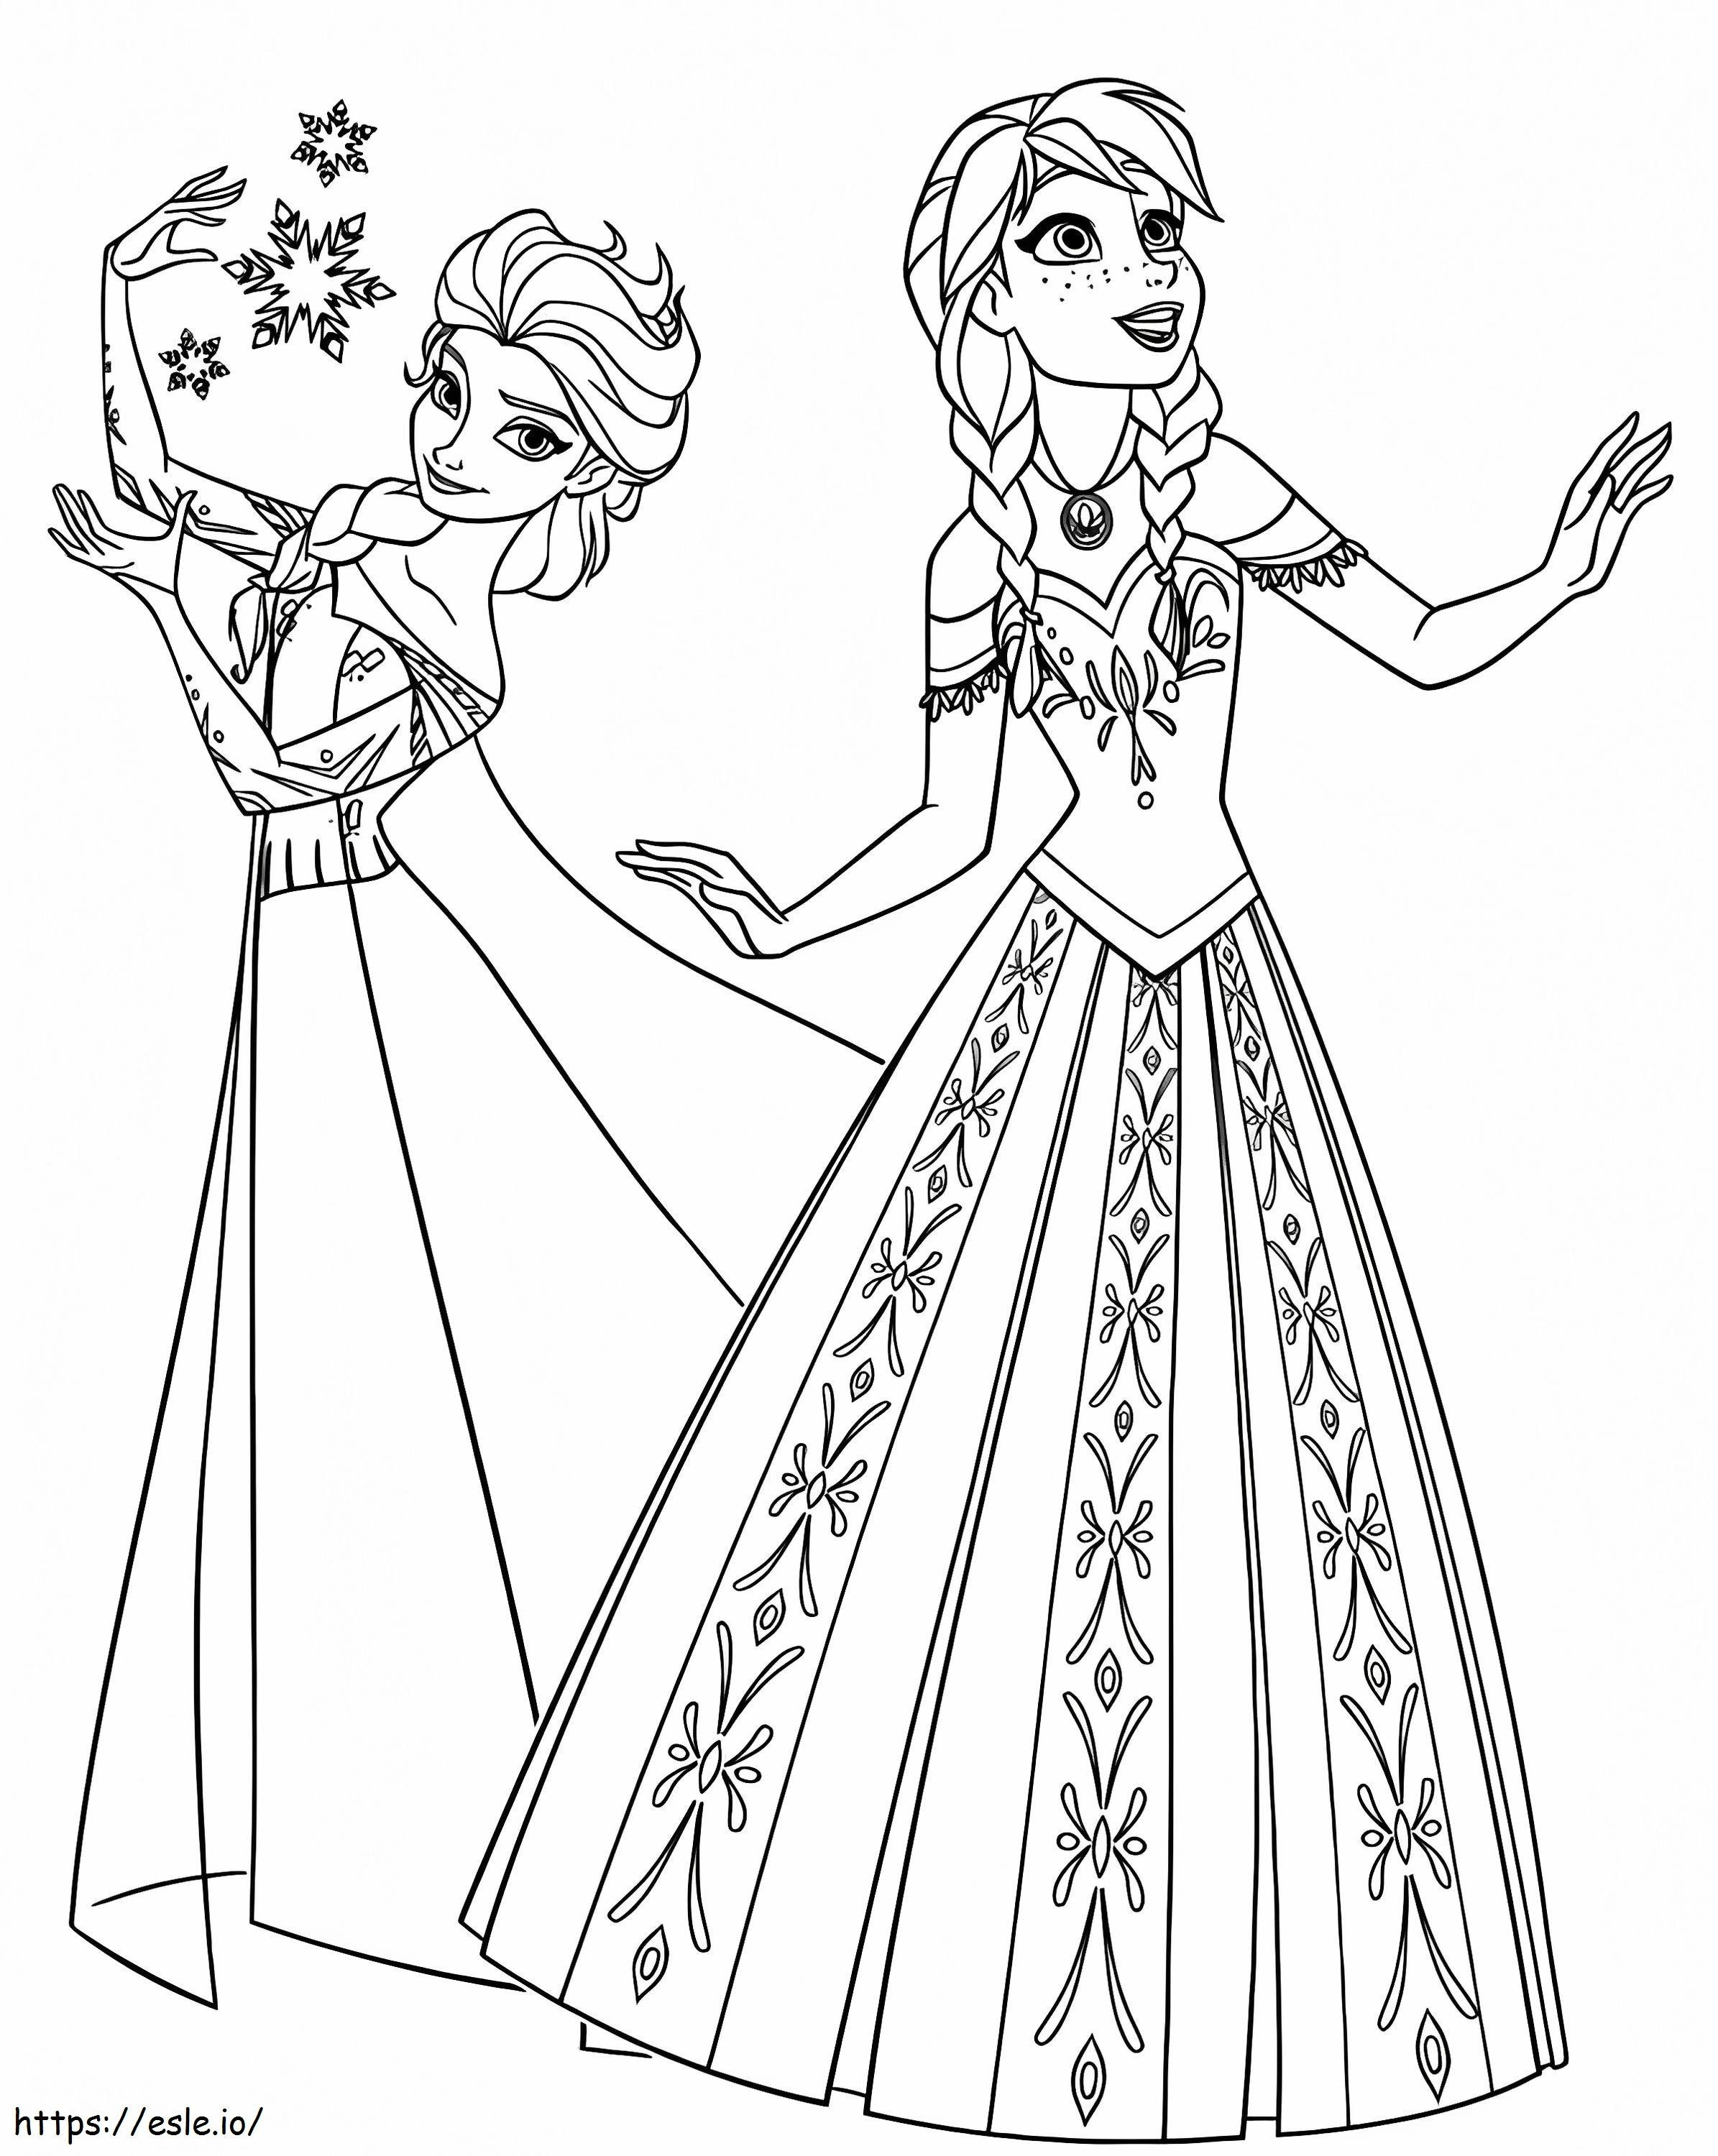 Elsa Anna Dancing And Singing coloring page